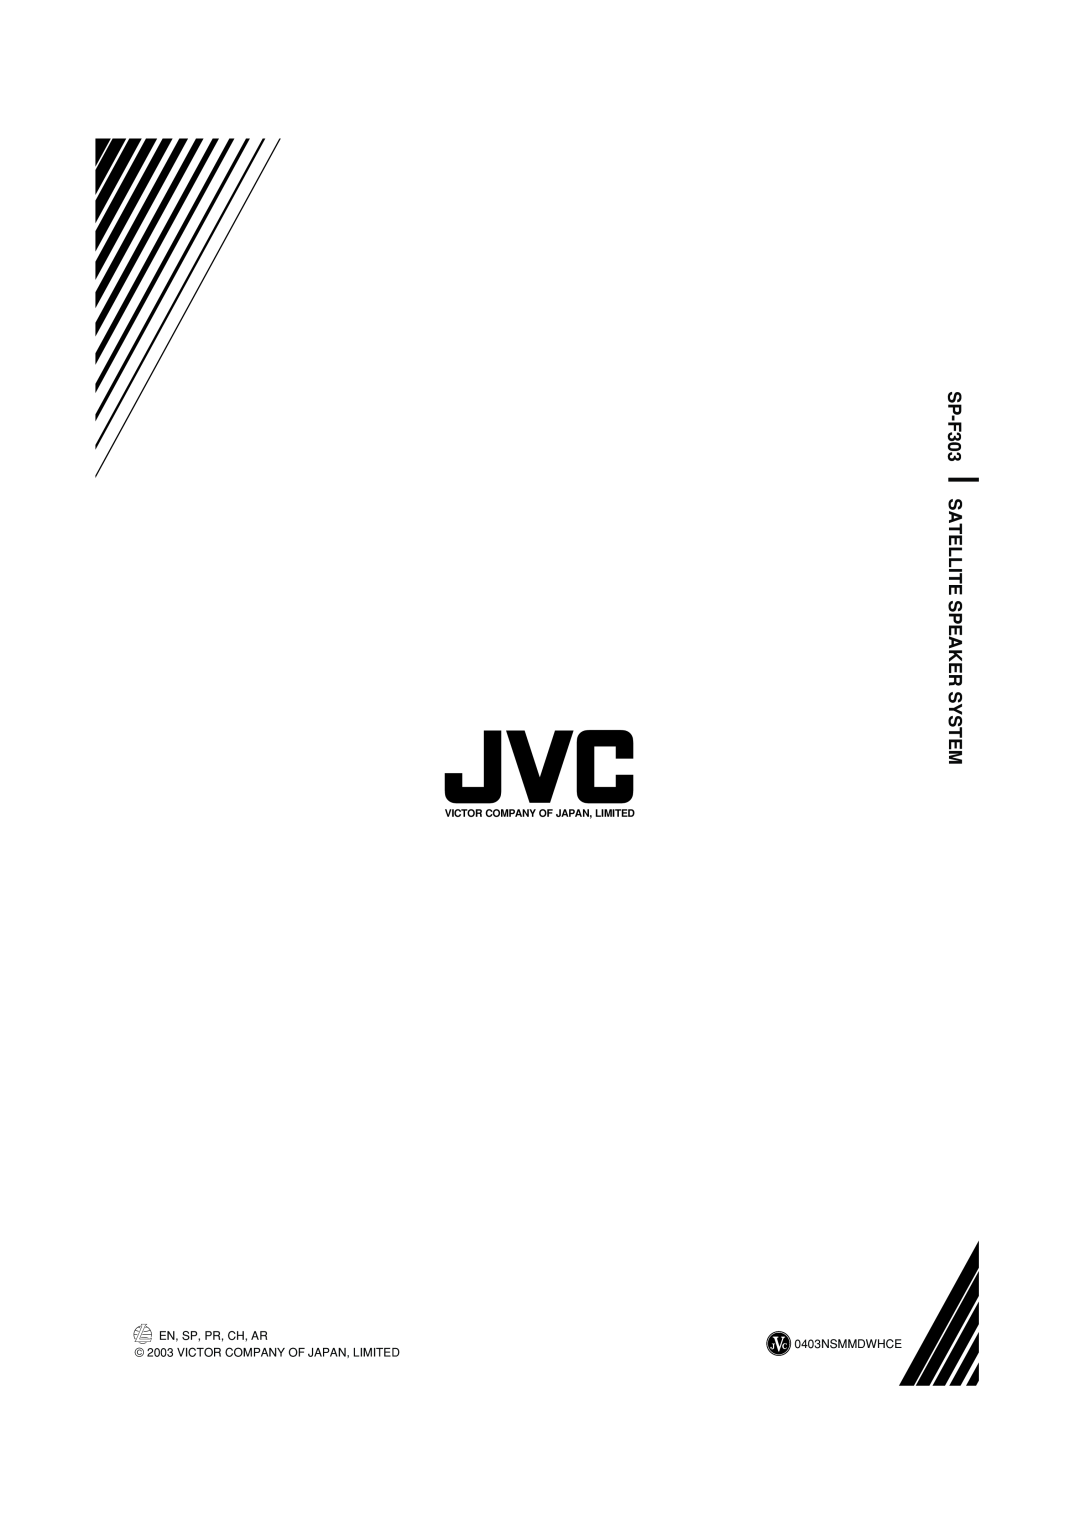 JVC manual SP-F303SATELLITE SPEAKER SYSTEM, EN, SP, PR, CH, AR 0403NSMMDWHCE, Victor Company Of Japan, Limited 